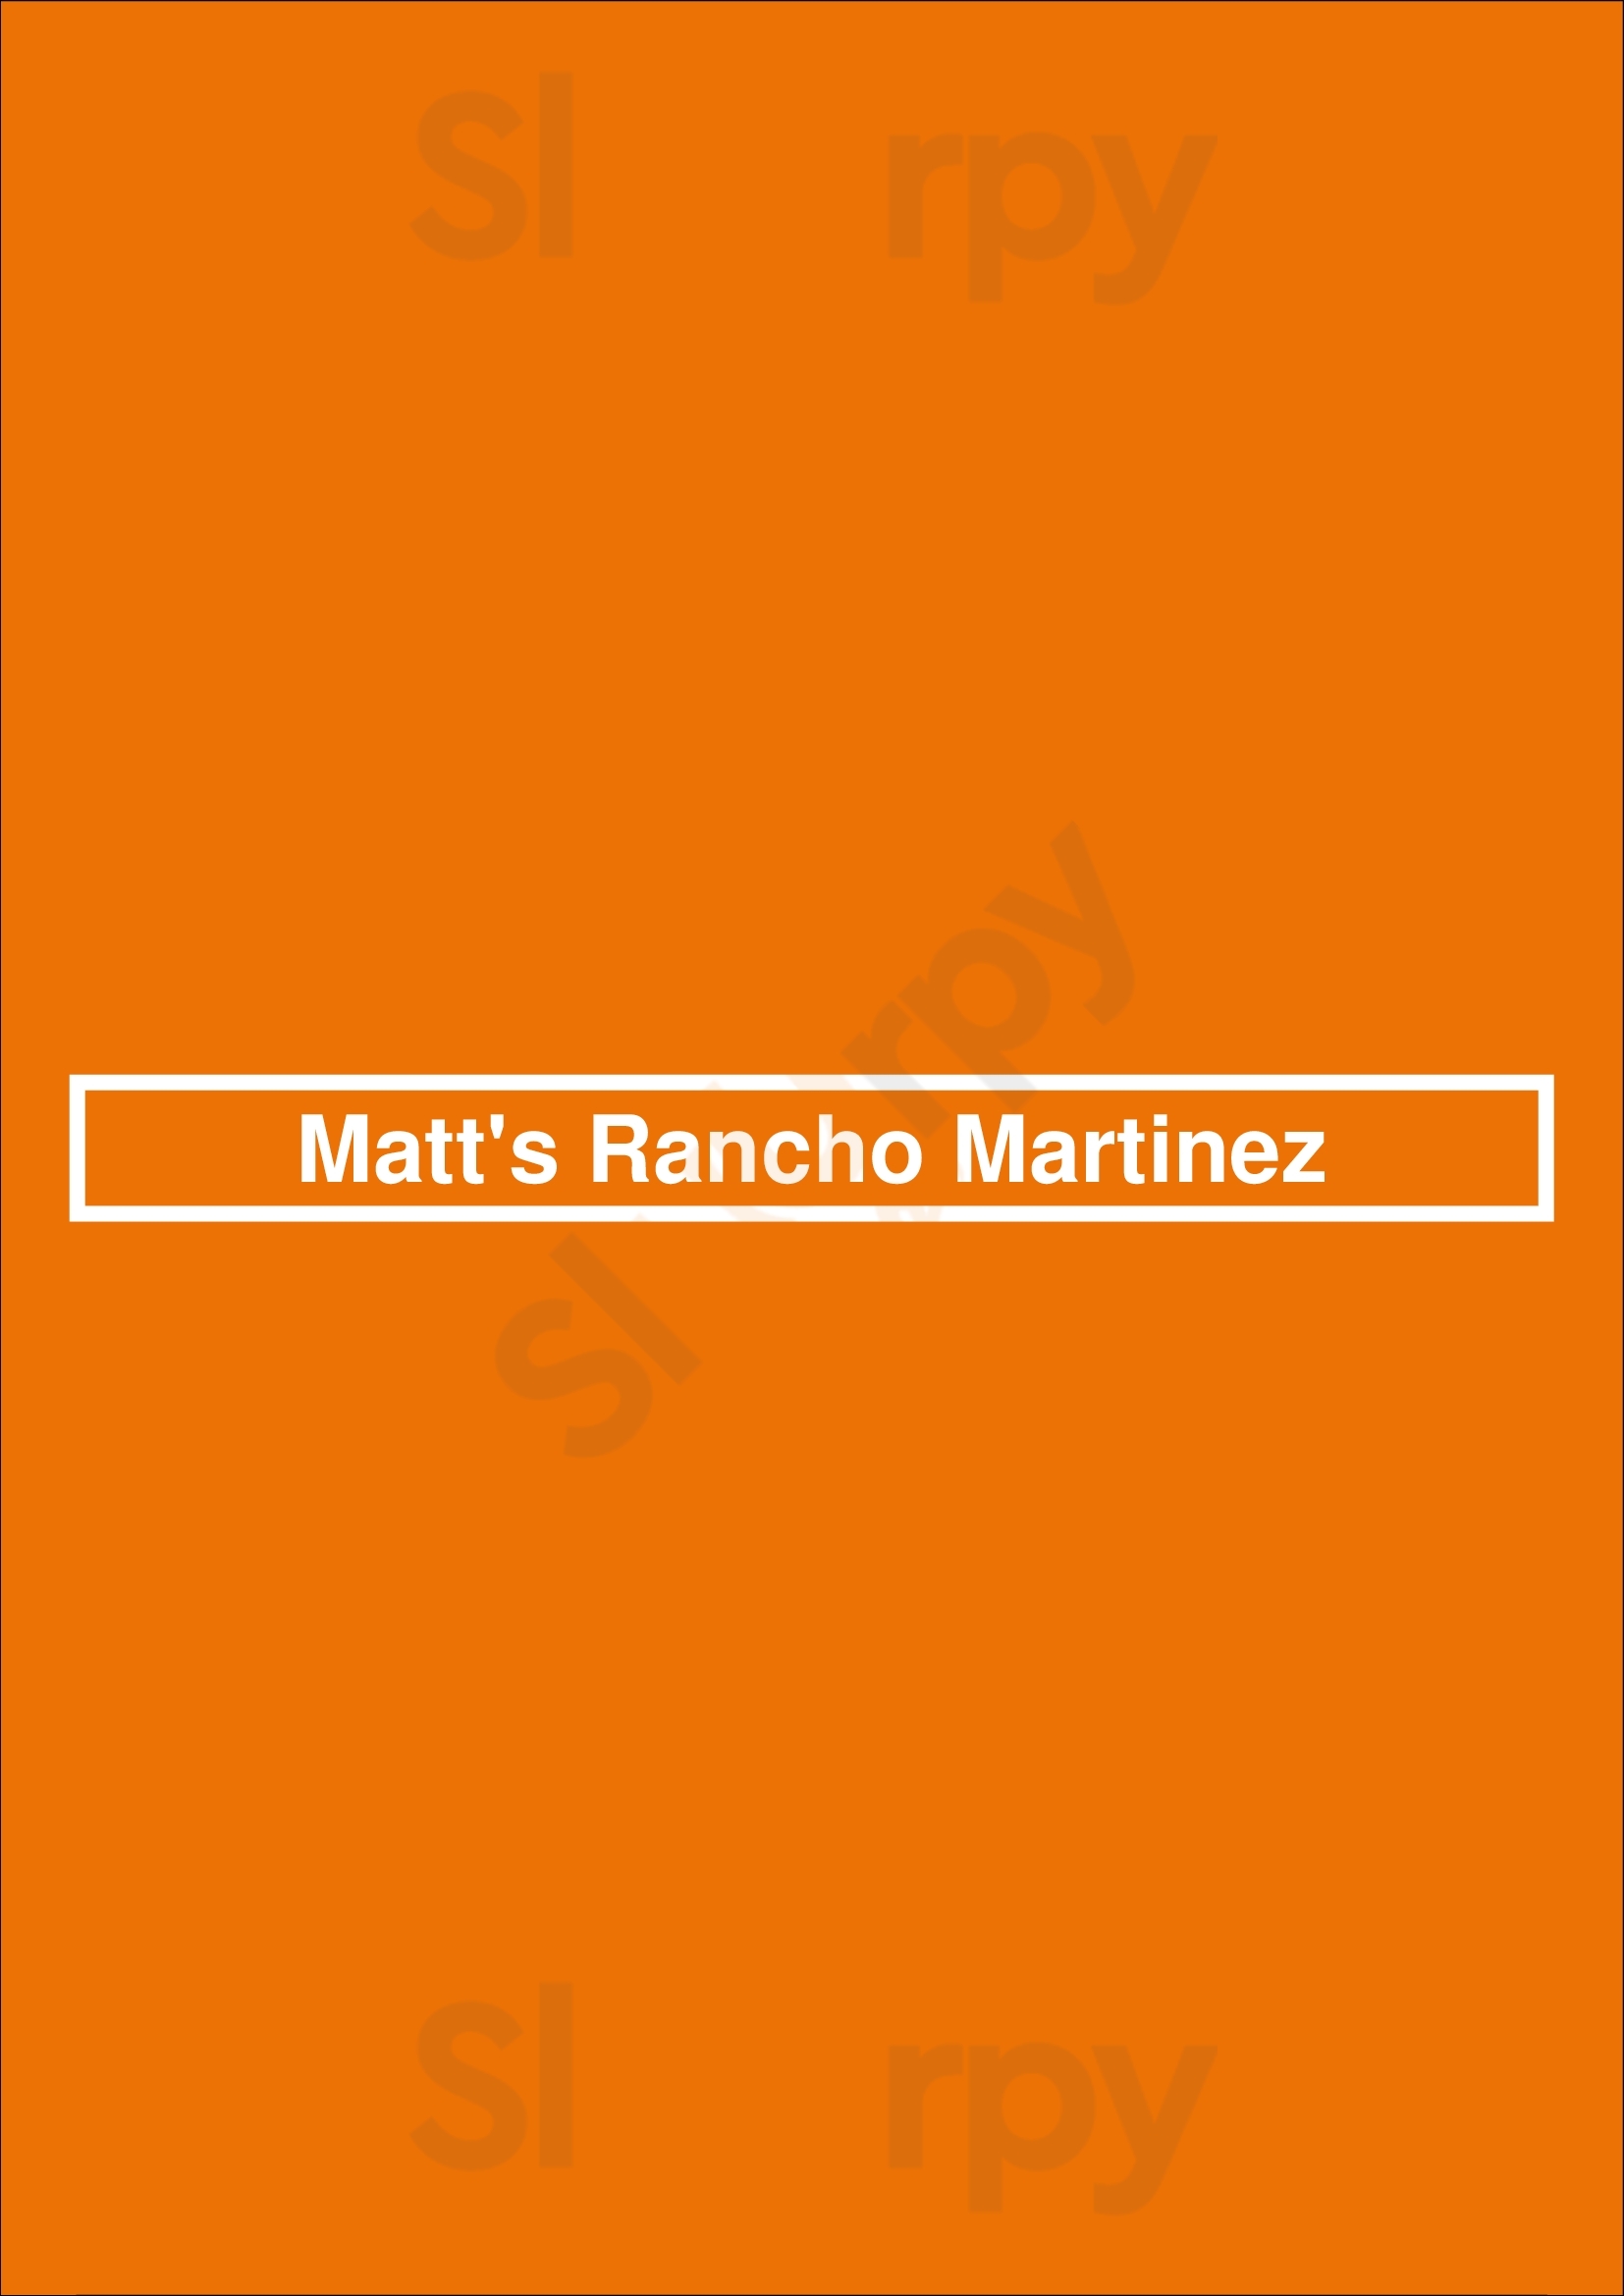 Matt's Rancho Martinez Dallas Menu - 1